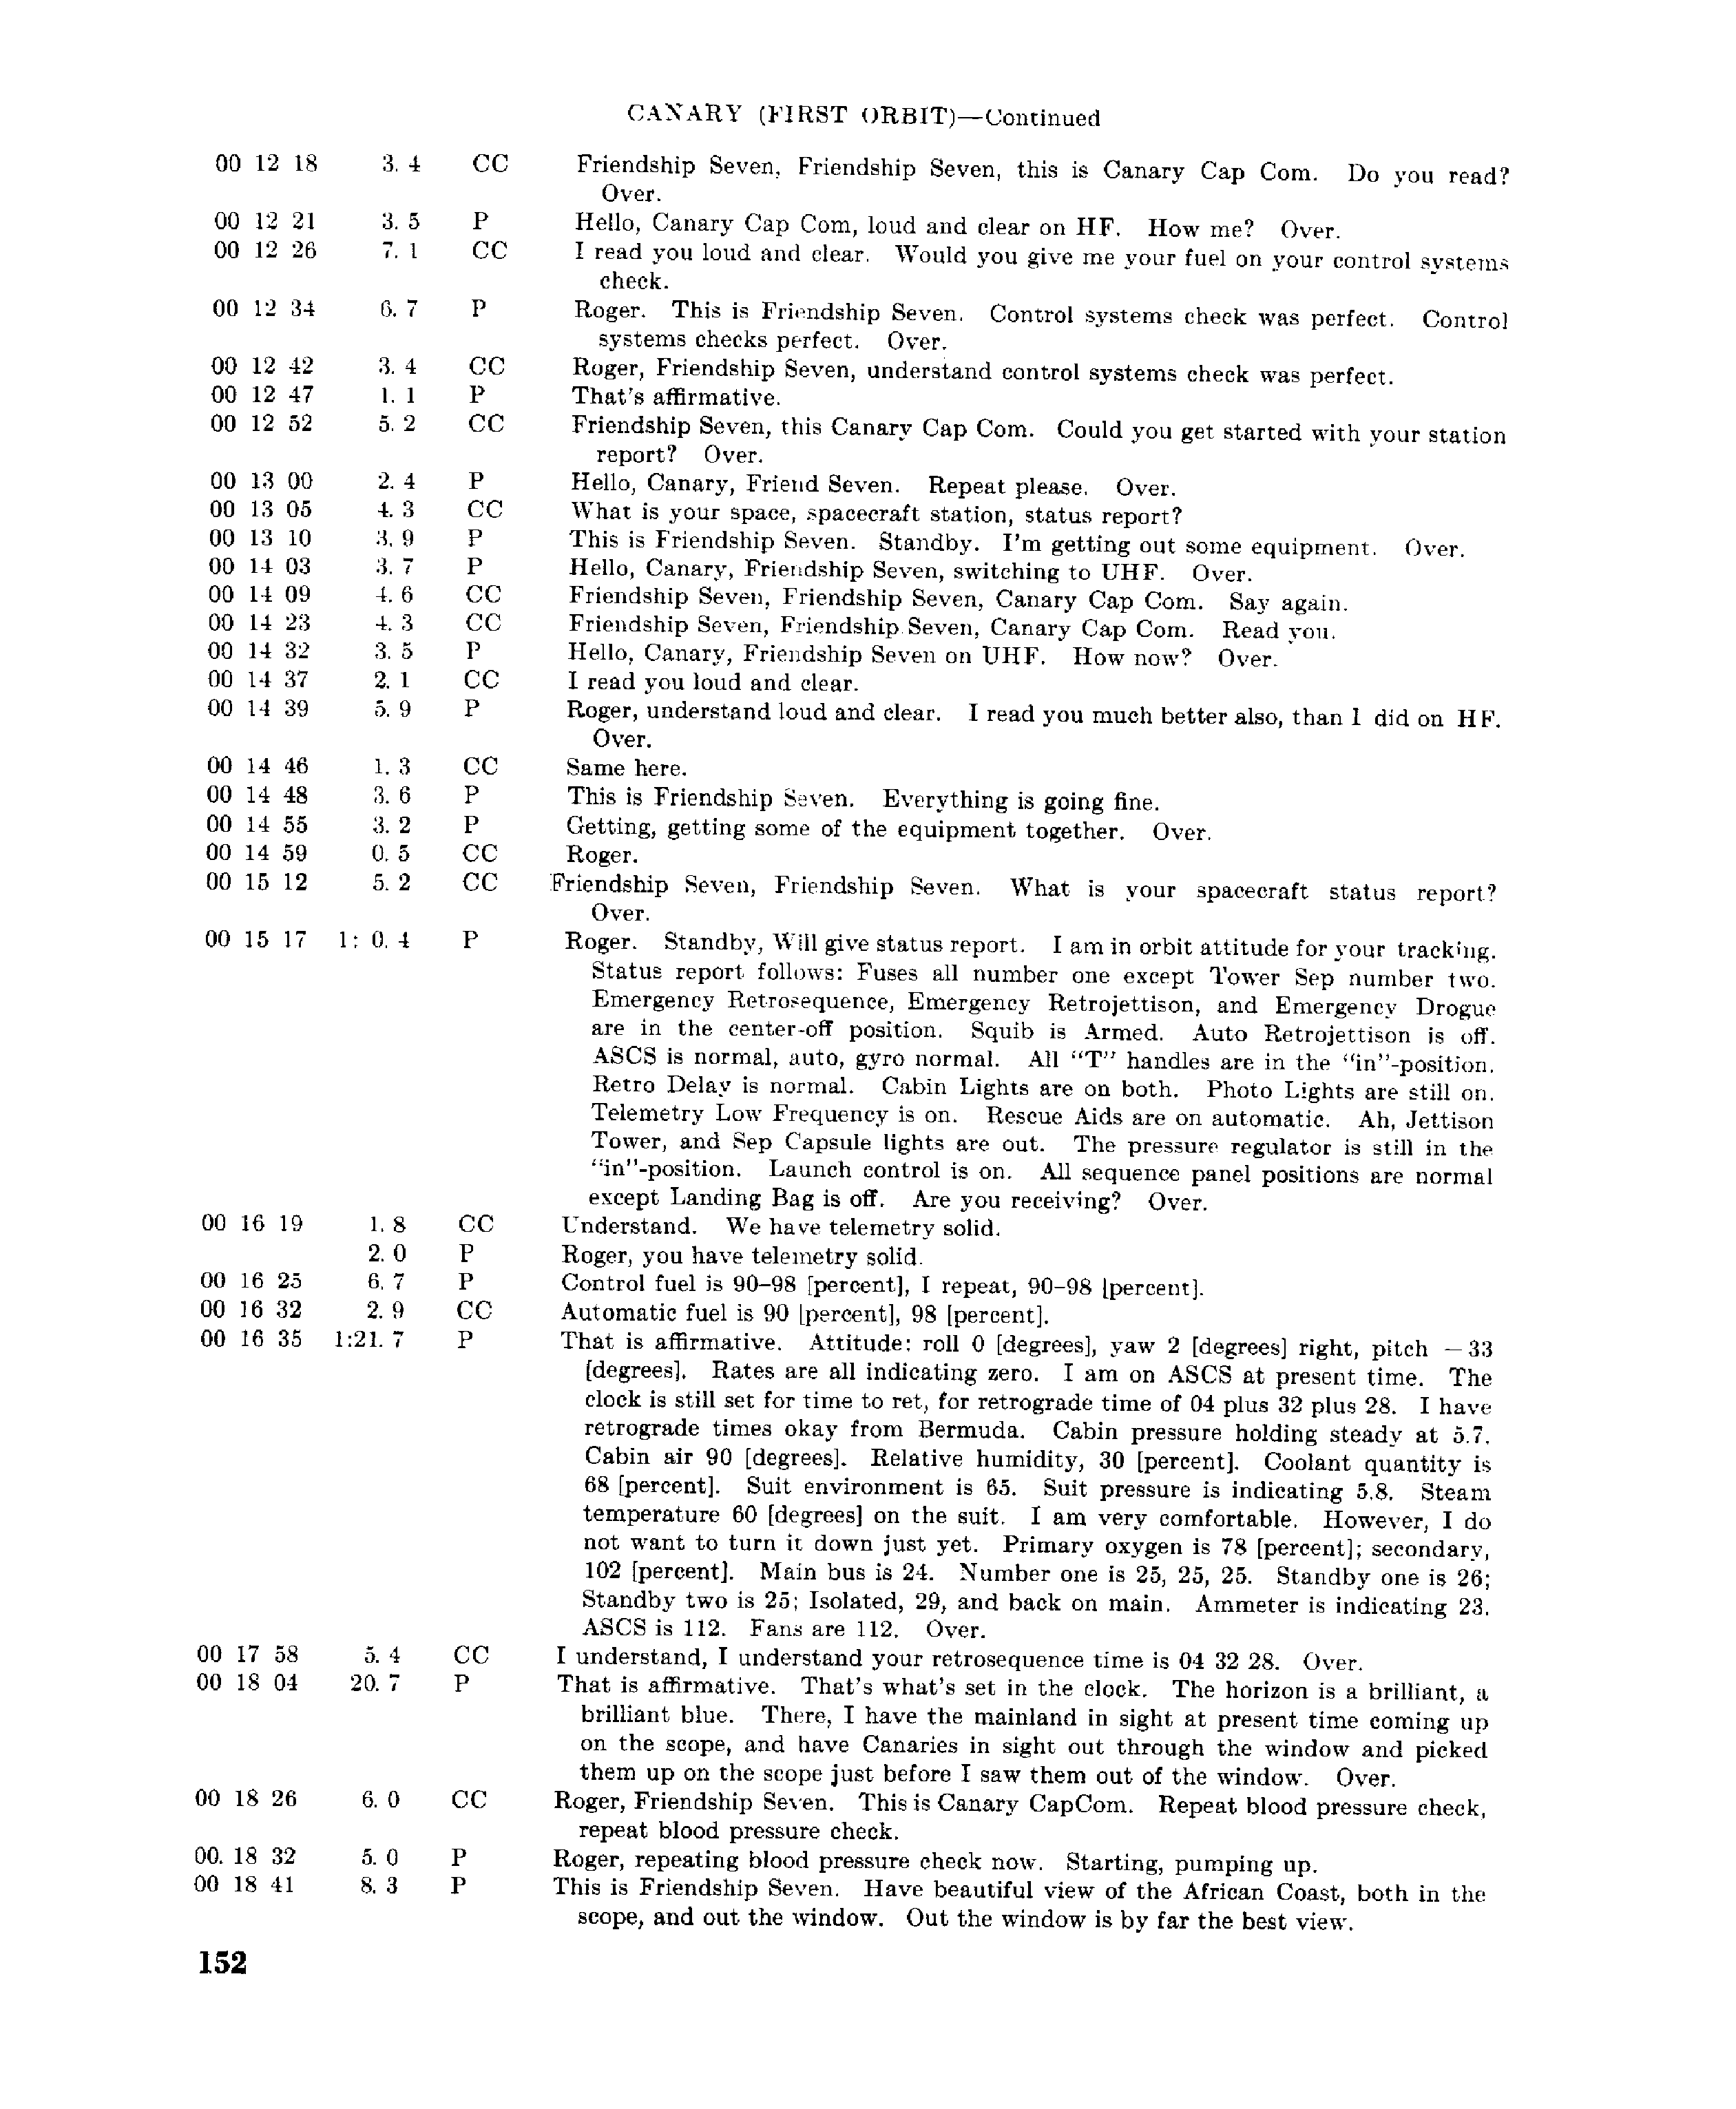 Page 151 of Mercury 6’s original transcript